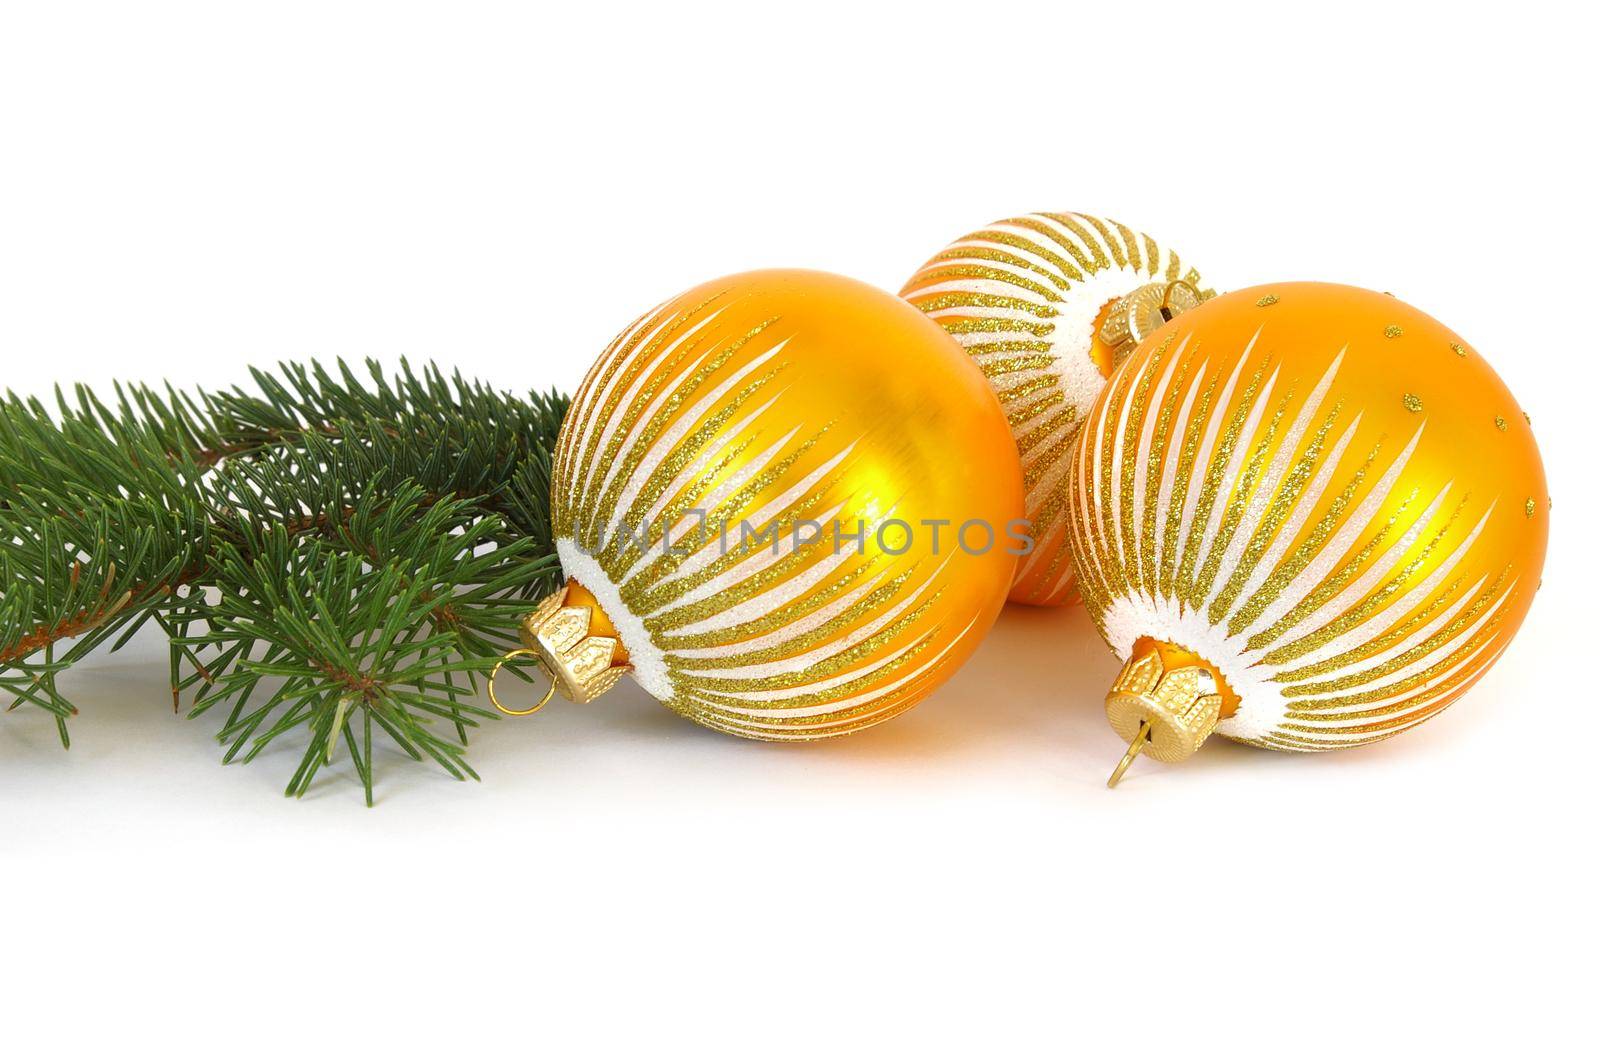 Golden spheres and Christmas tree by tan4ikk1